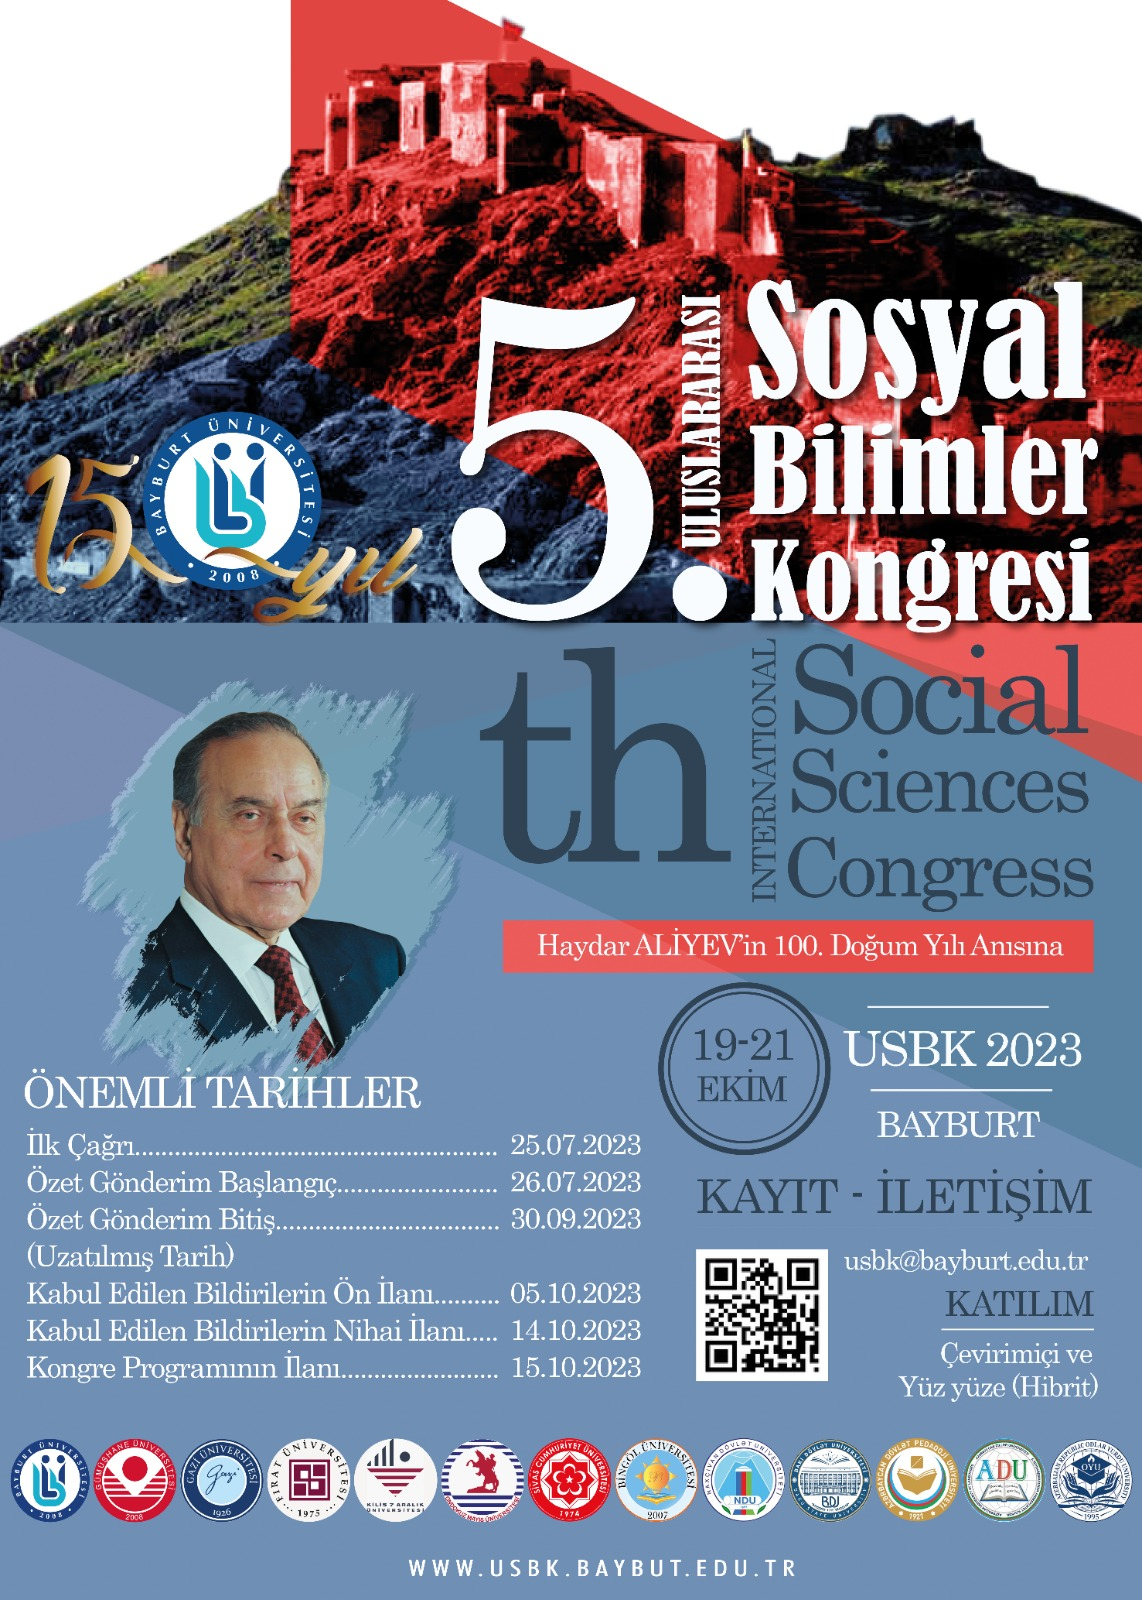 5th International Social Sciences Congress